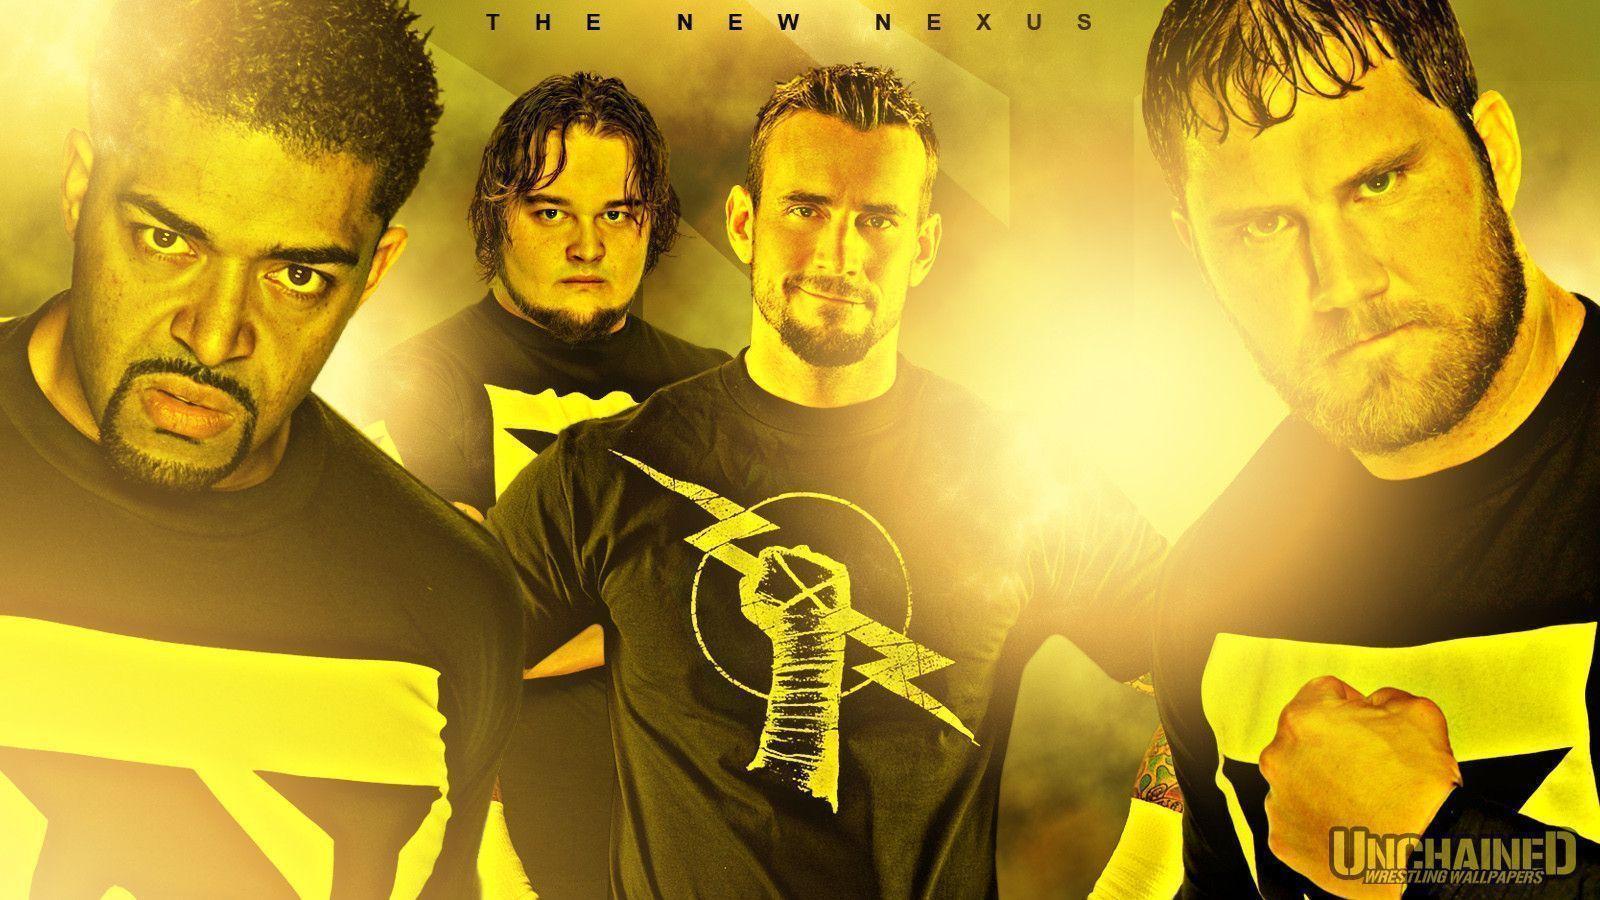 WWE CM Punk / New Nexus "Uprising" Wallpaper Unchained WWE.com